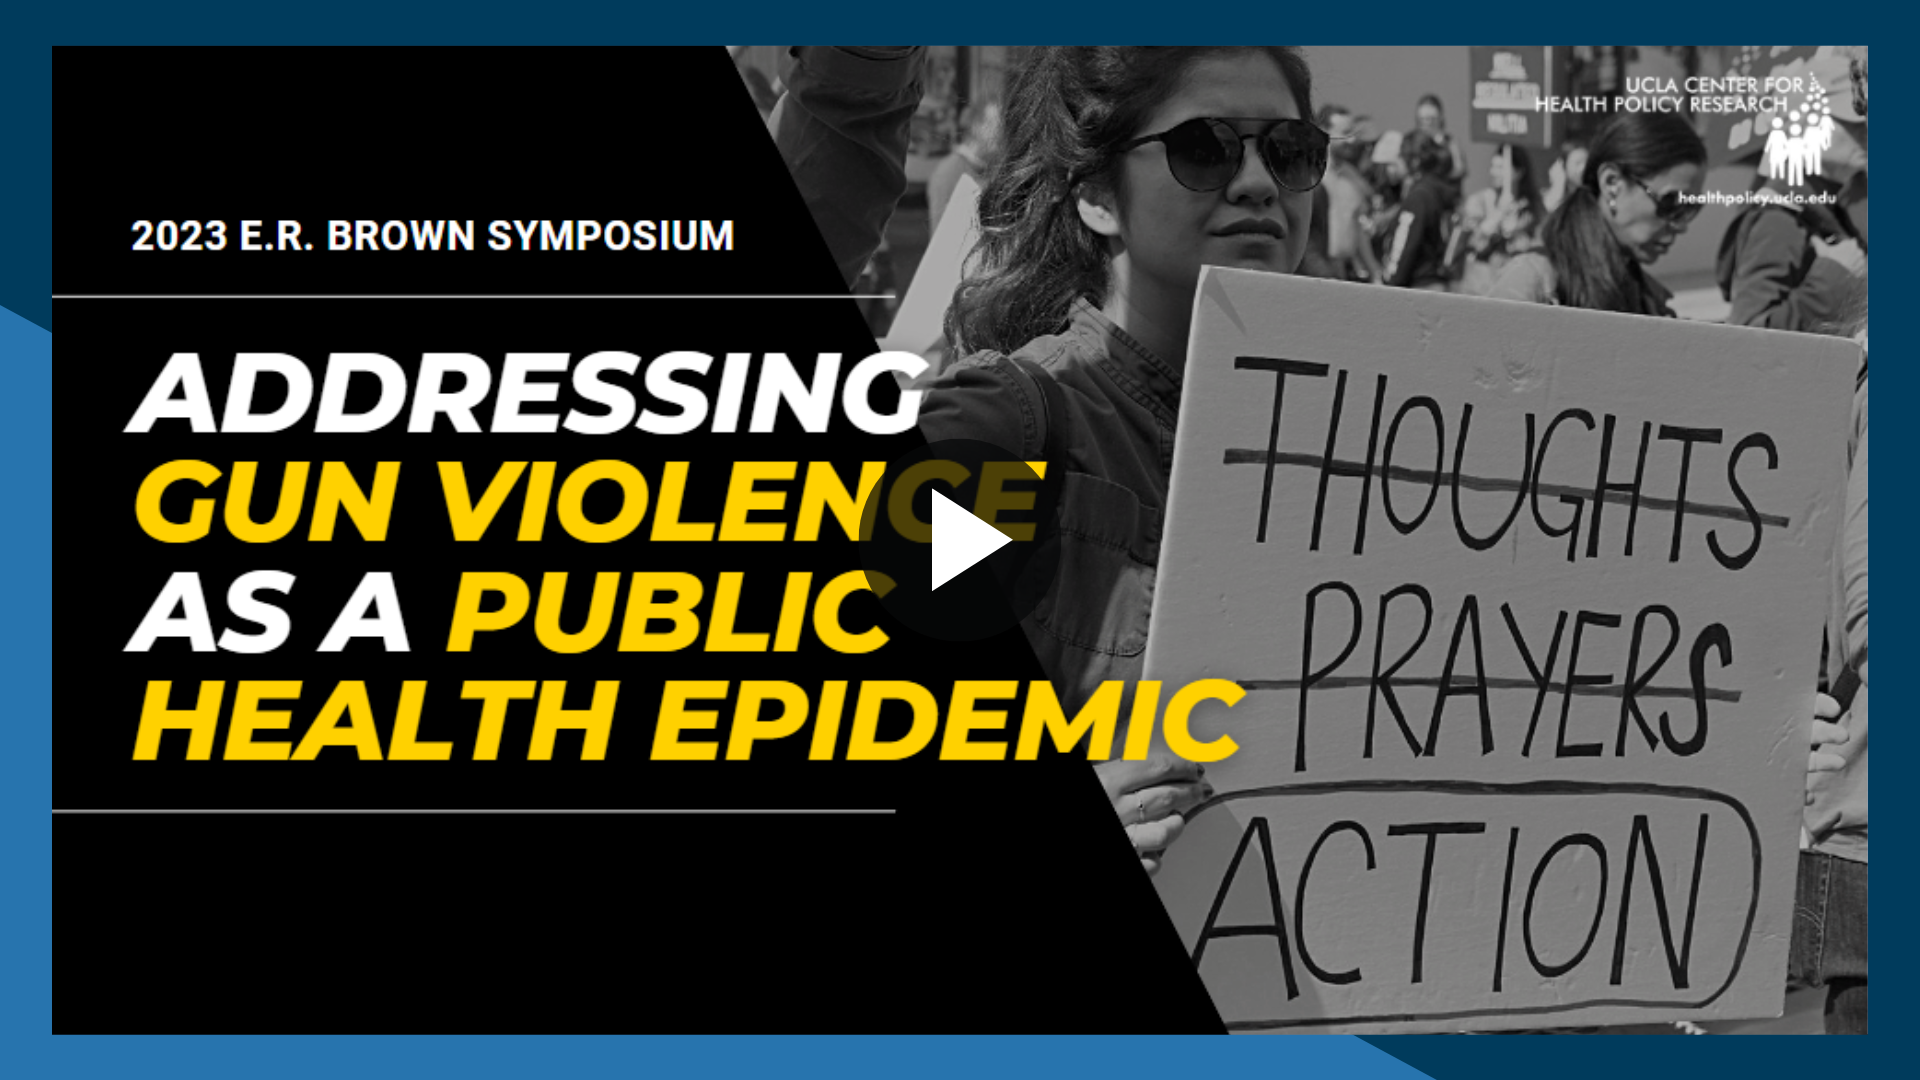 "2023 E.R. Brown Symposium: Addressing Gun Violence as a Public Health Epidemic: February 13, 2023     "